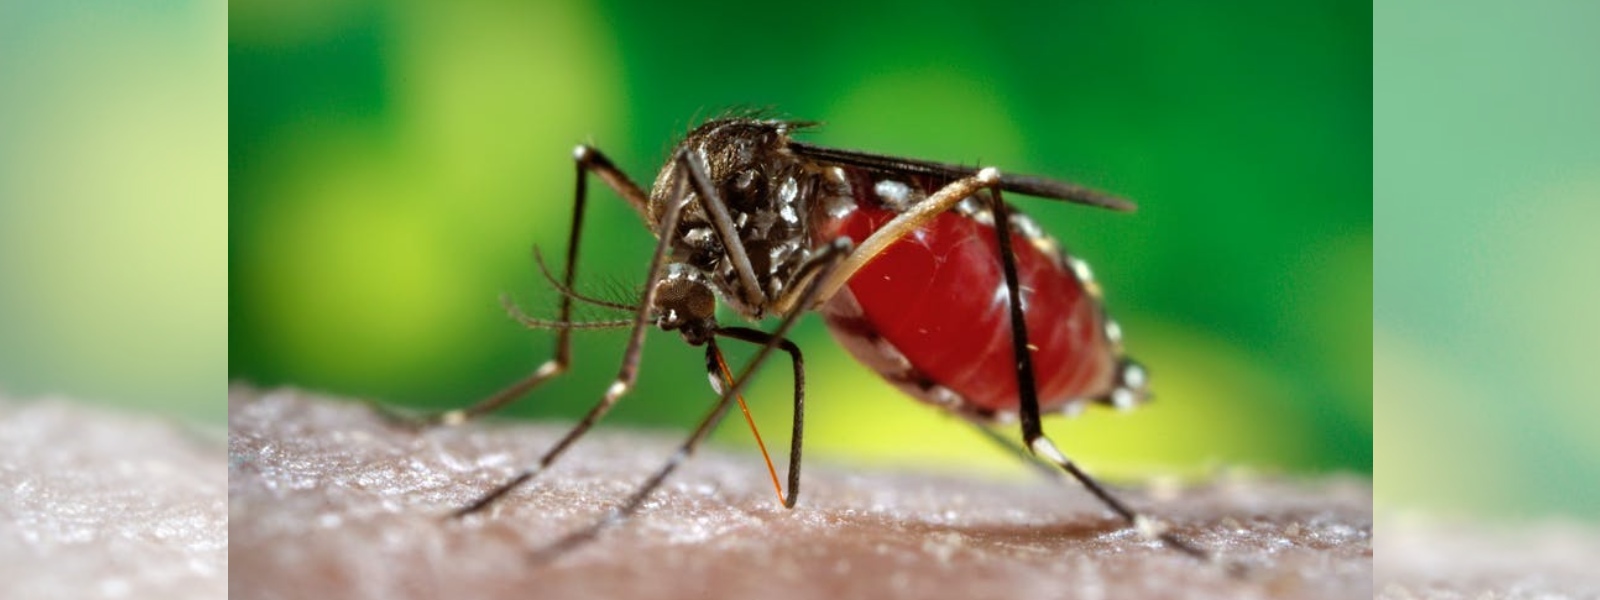 Action to be taken against premises conducive for dengue breeding